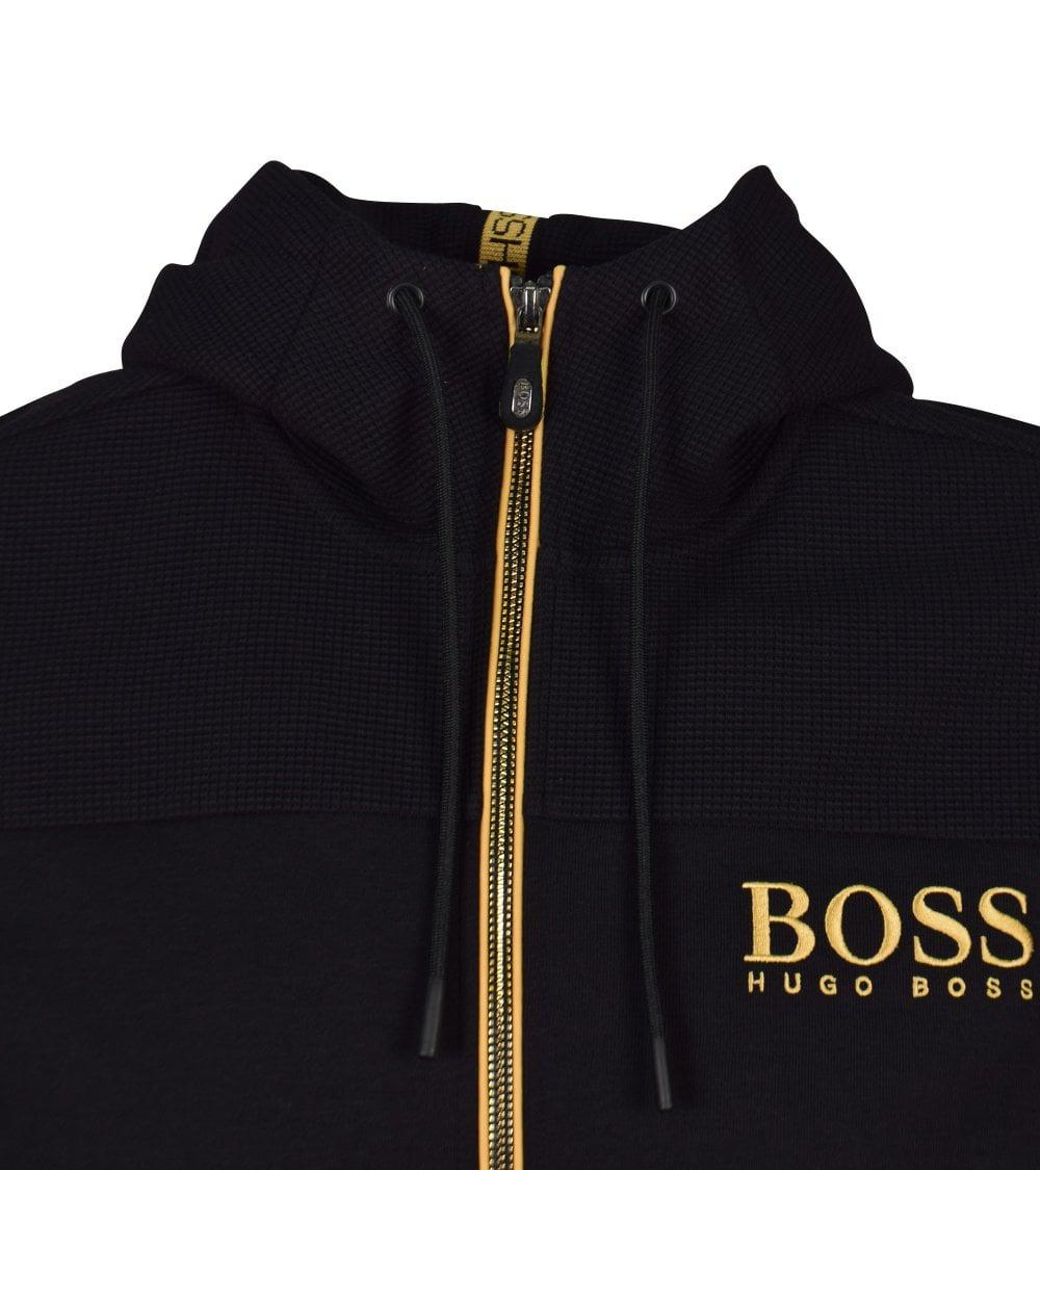 Bakkerij januari schildpad BOSS by HUGO BOSS Black/gold Logo Hoodie for Men | Lyst